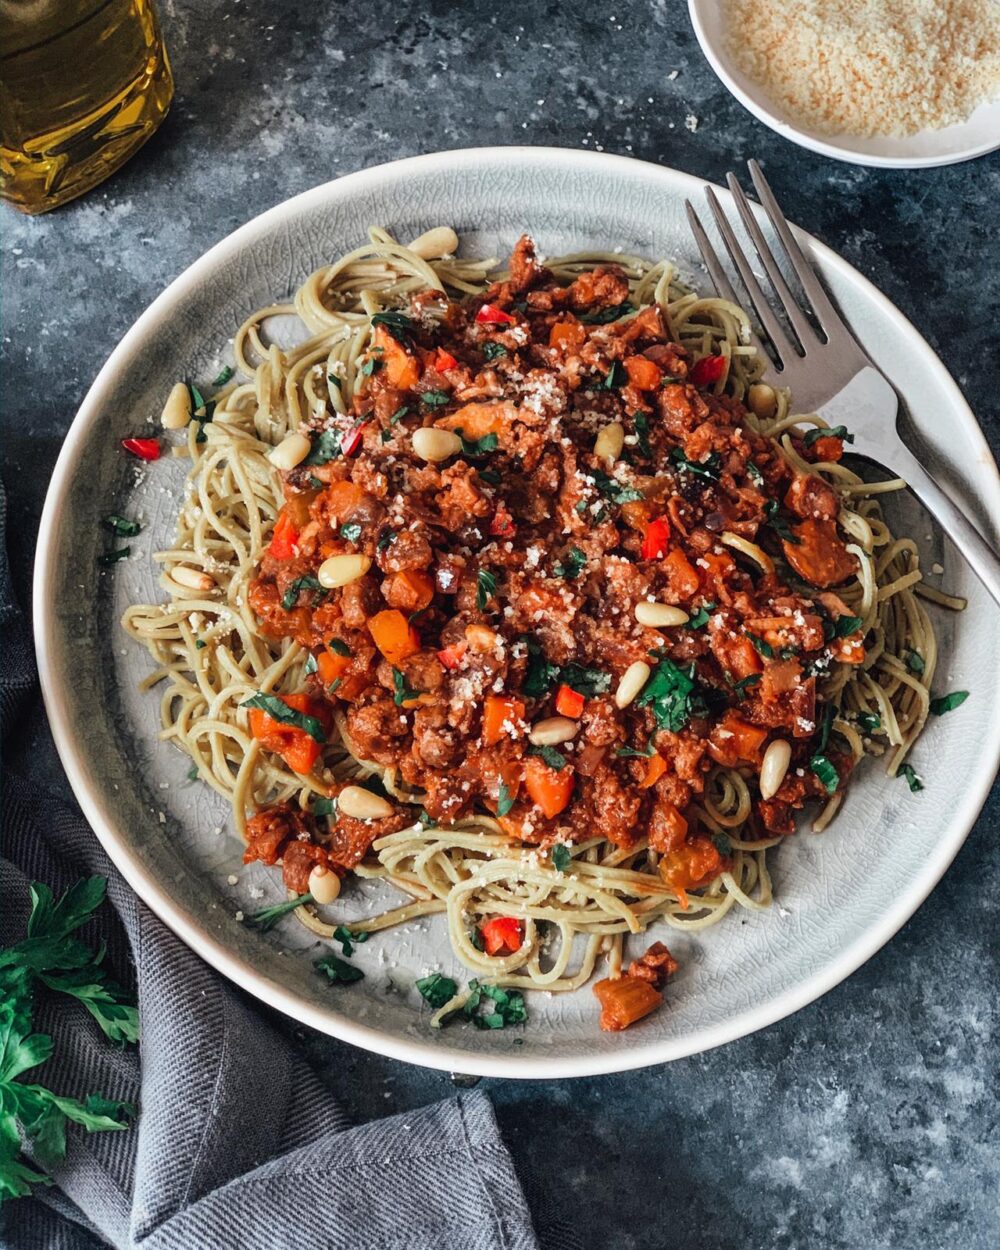 Explore Cuisine’s Edamame Spaghetti with Soya & Mushroom Ragu - The ...